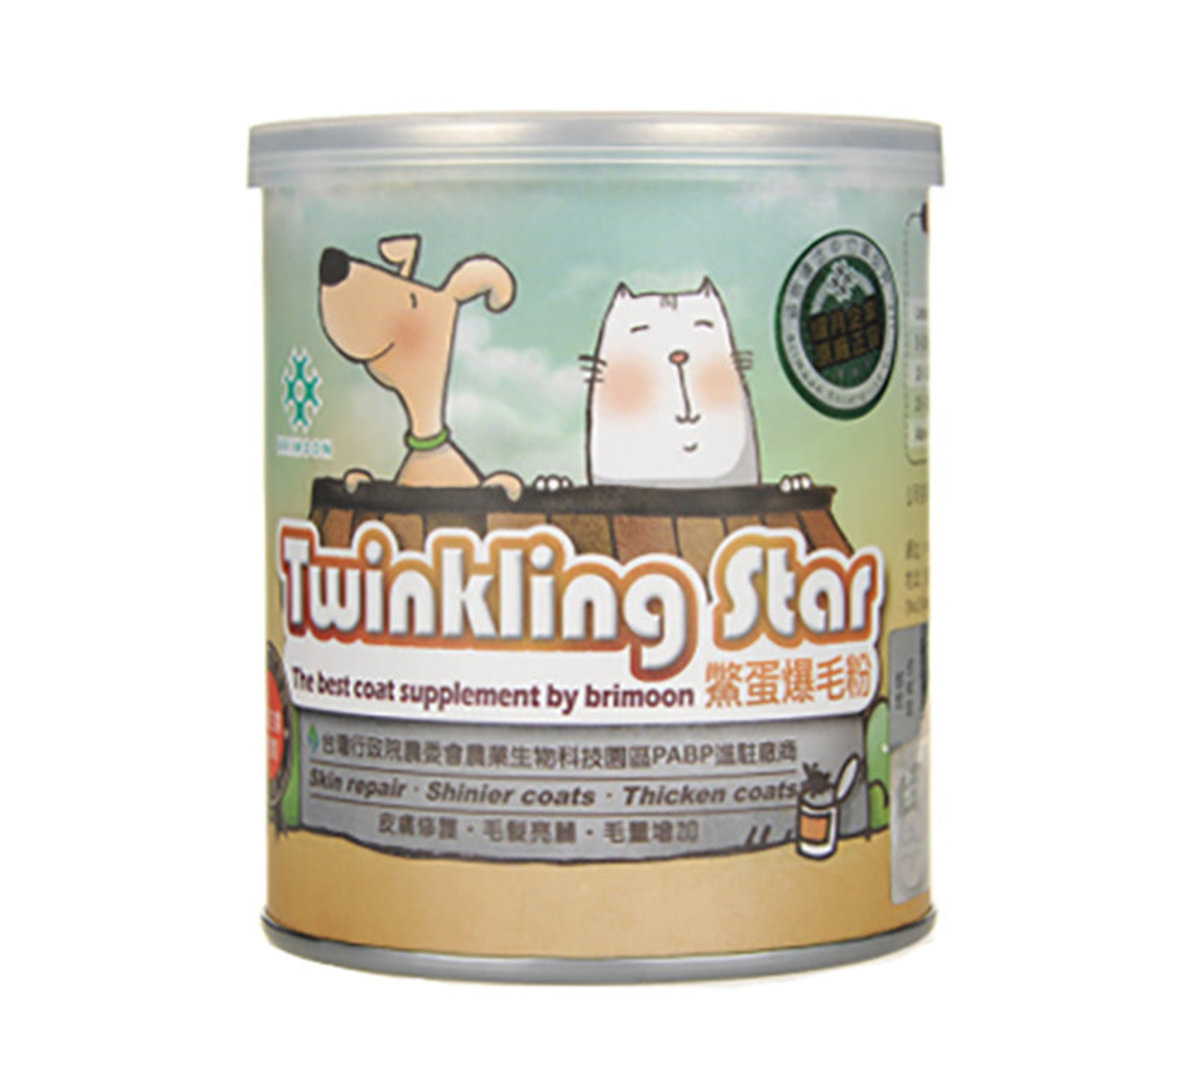 Twinkling Star | 寵物天然鱉蛋美毛爆毛粉 200克 #加強免疫．皮膚腸胃健康 | HKTVmall 香港最大網購平台